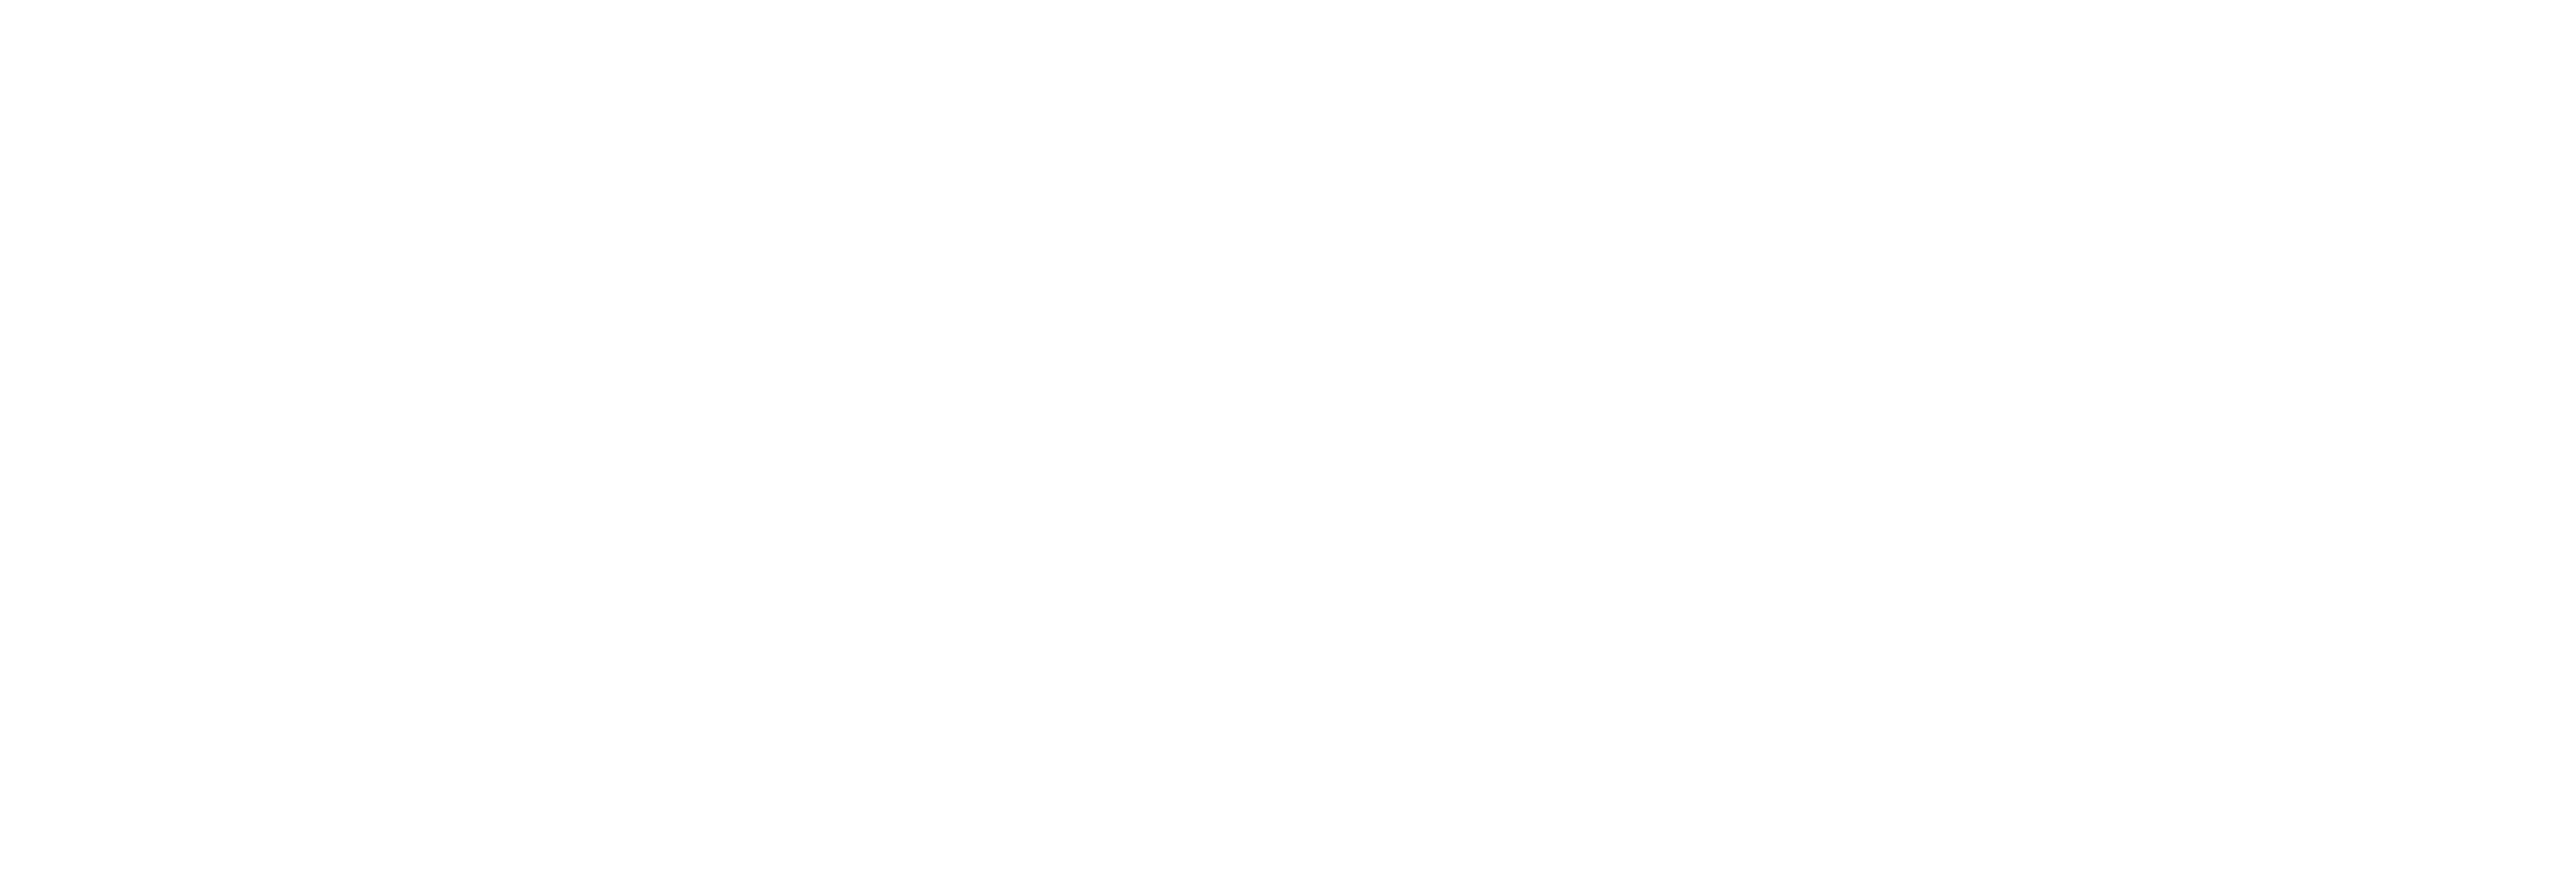 AniCura Dyresykehus Trondheim logo